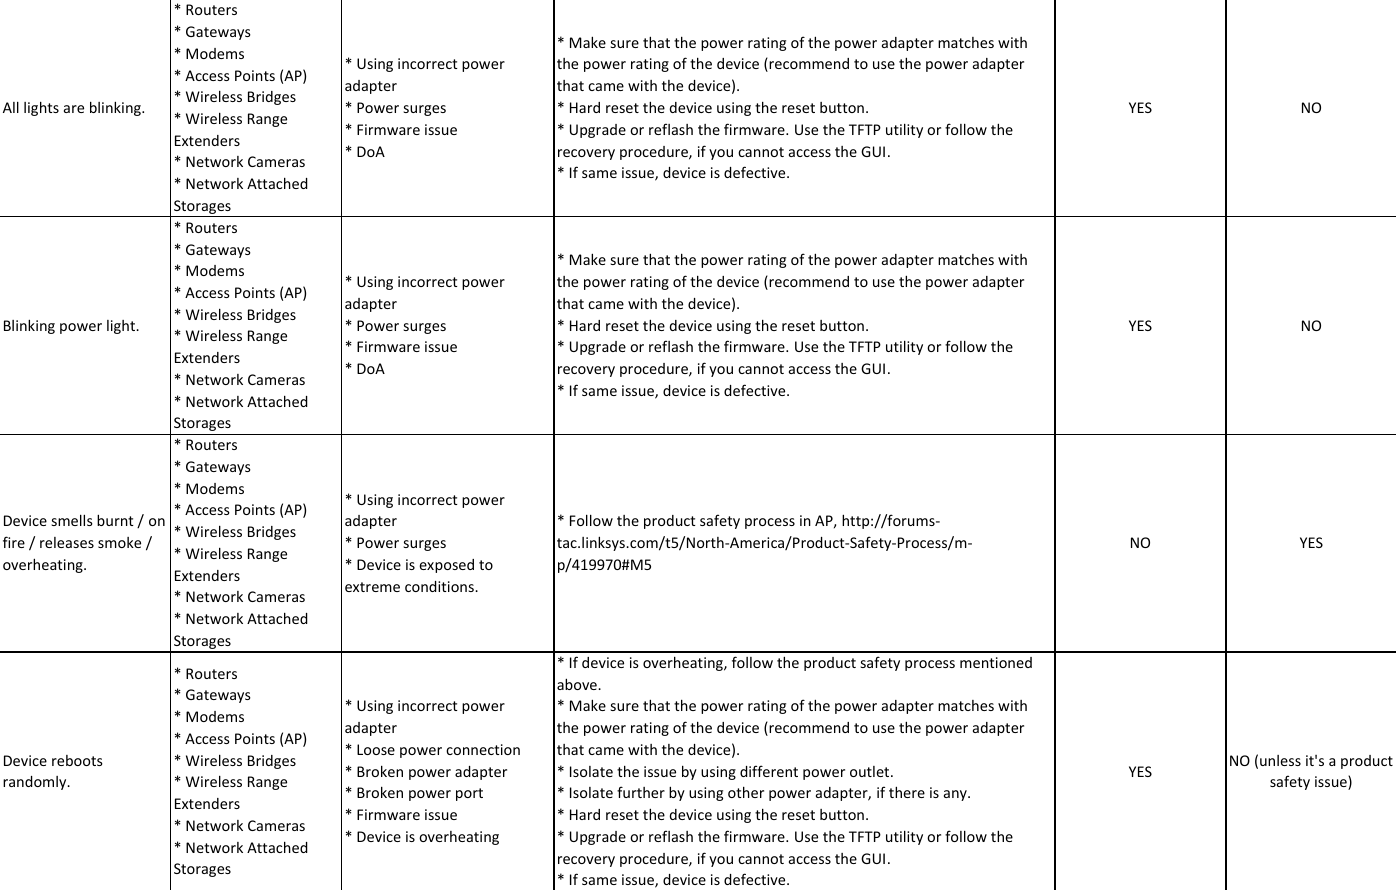 Page 2 of 11 - LInksys RMA Checklistx  22. L1 Checklist